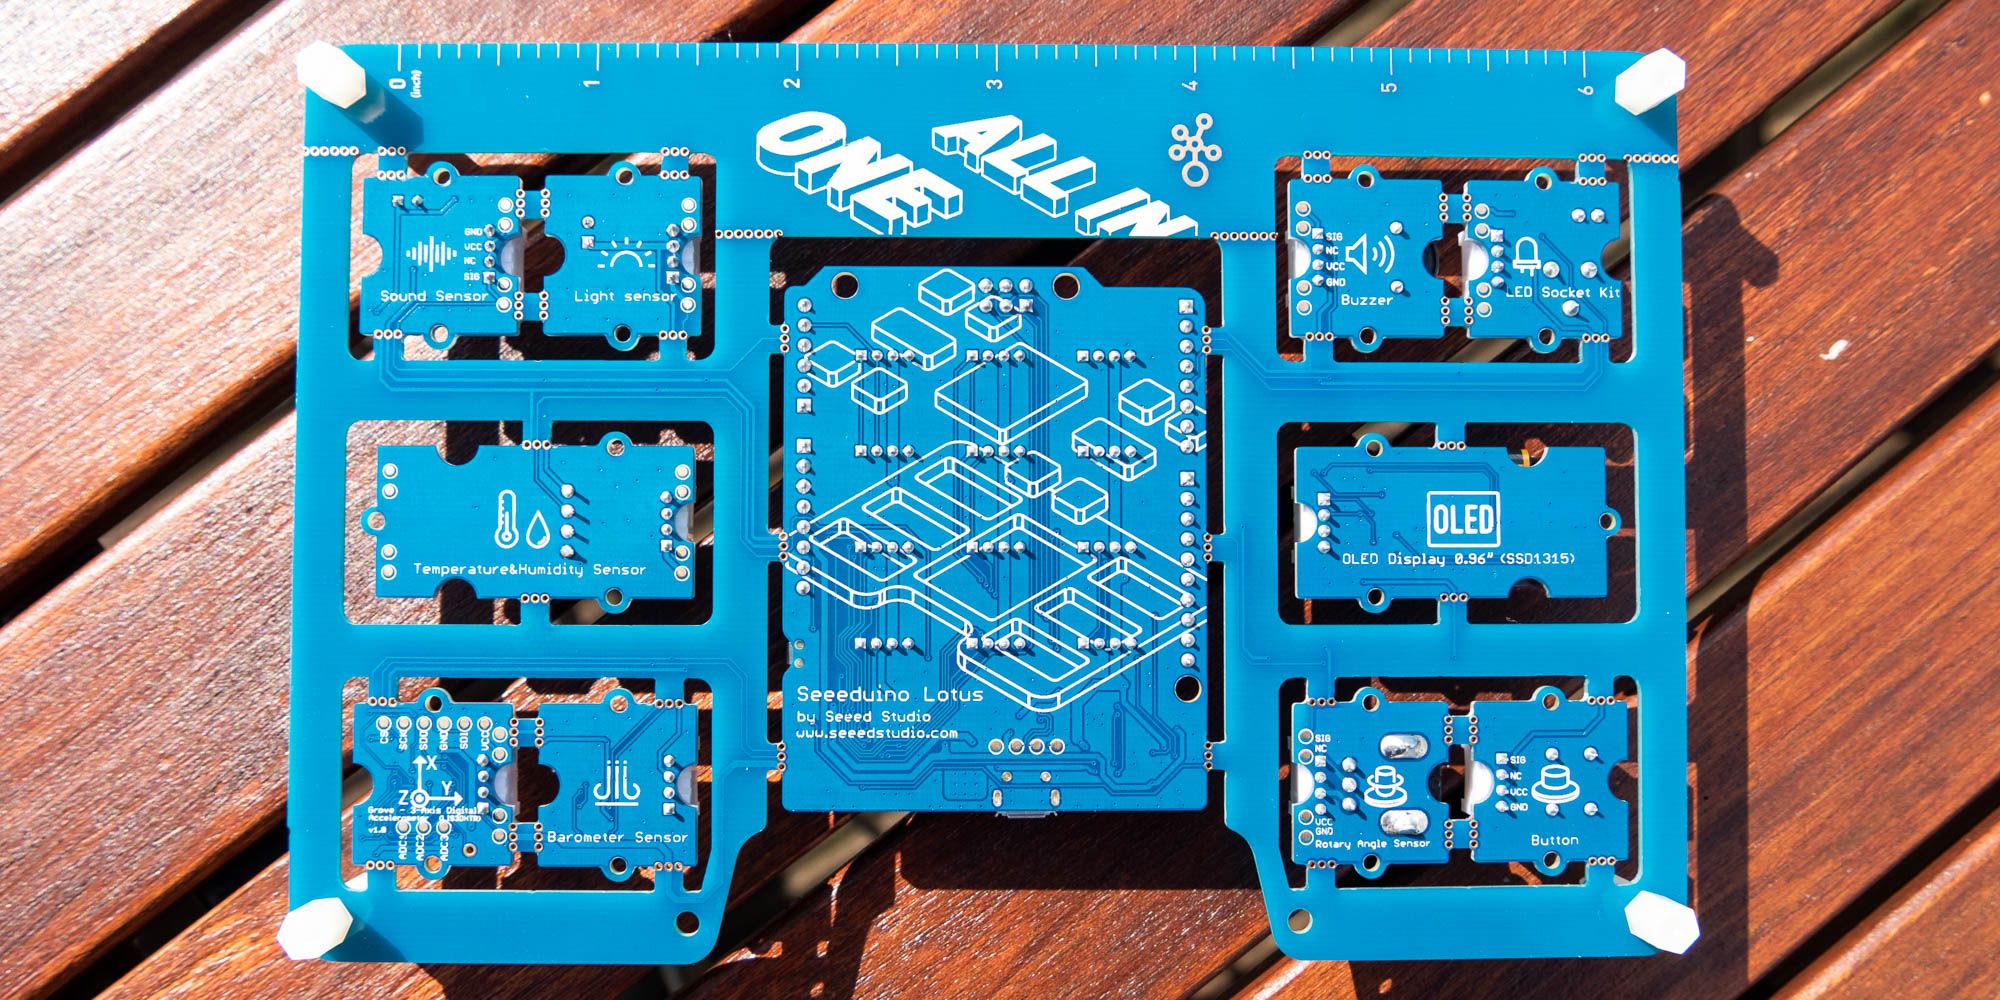 grove beginner kit rear - Grove Beginner Kit for Arduino Review: il miglior kit di base per Arduino ancora